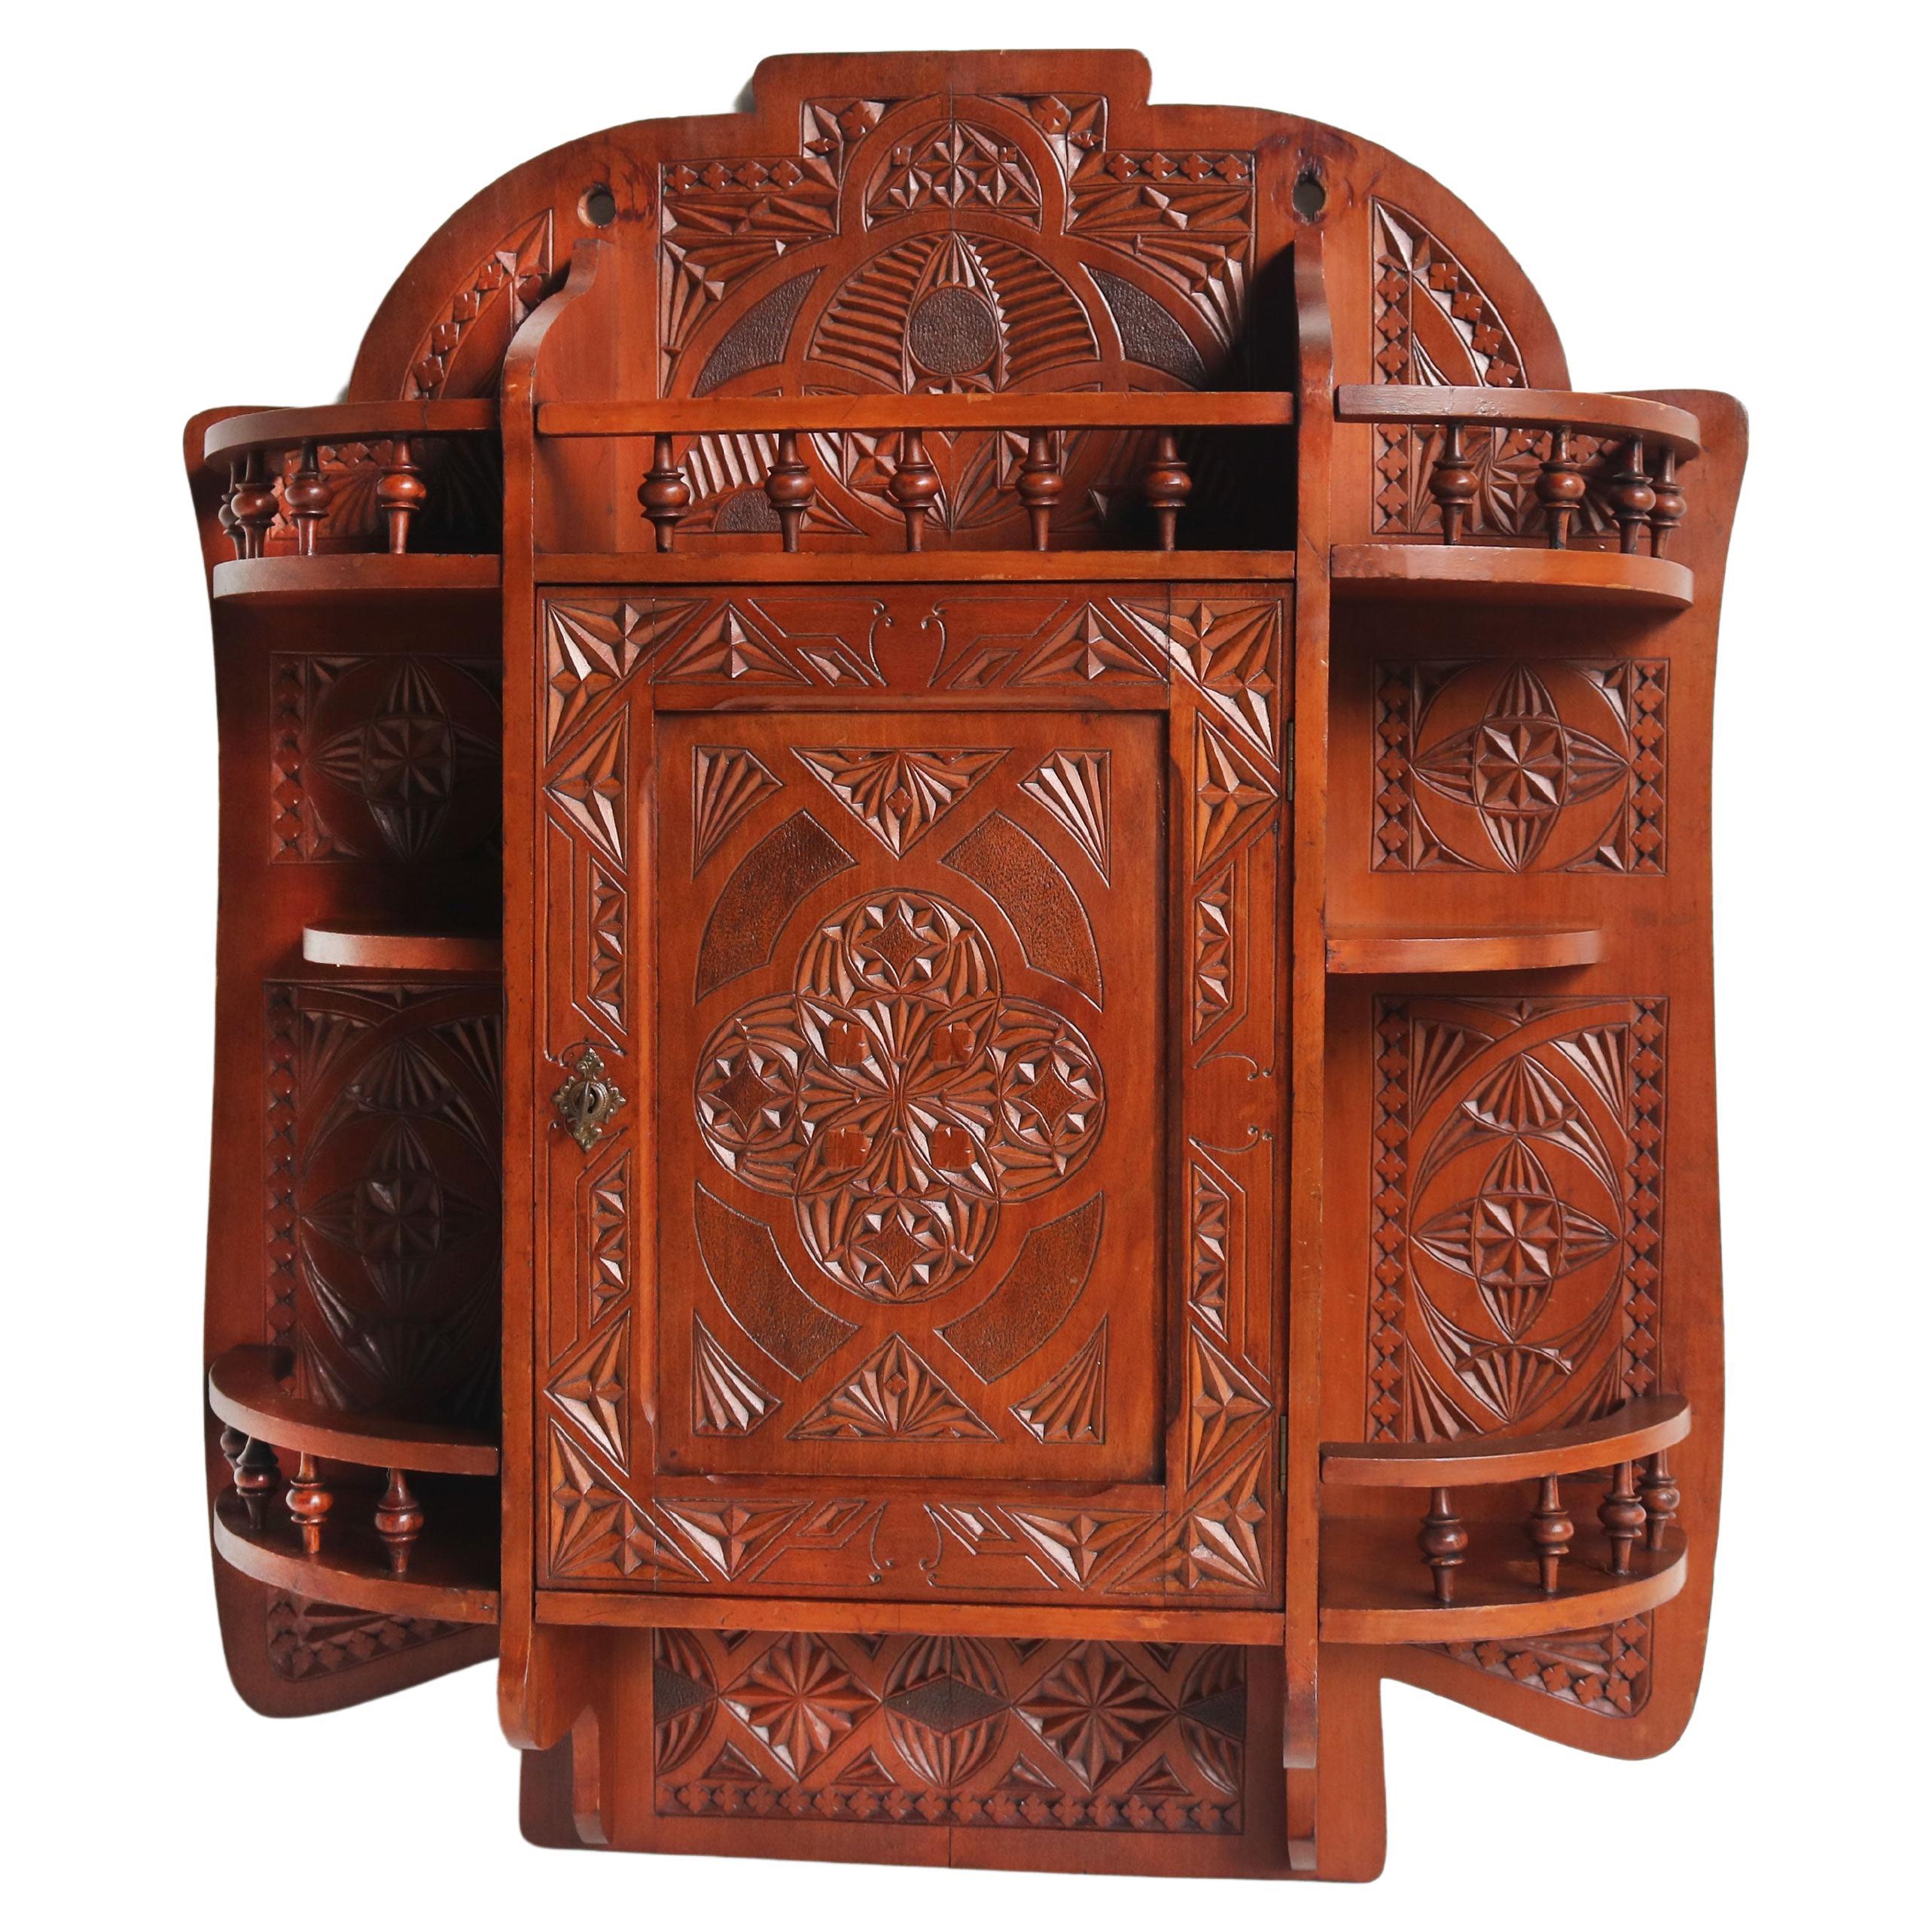 Antique Dutch Arts & Crafts chip carved wall cabinet 1910 Folk art wood carved